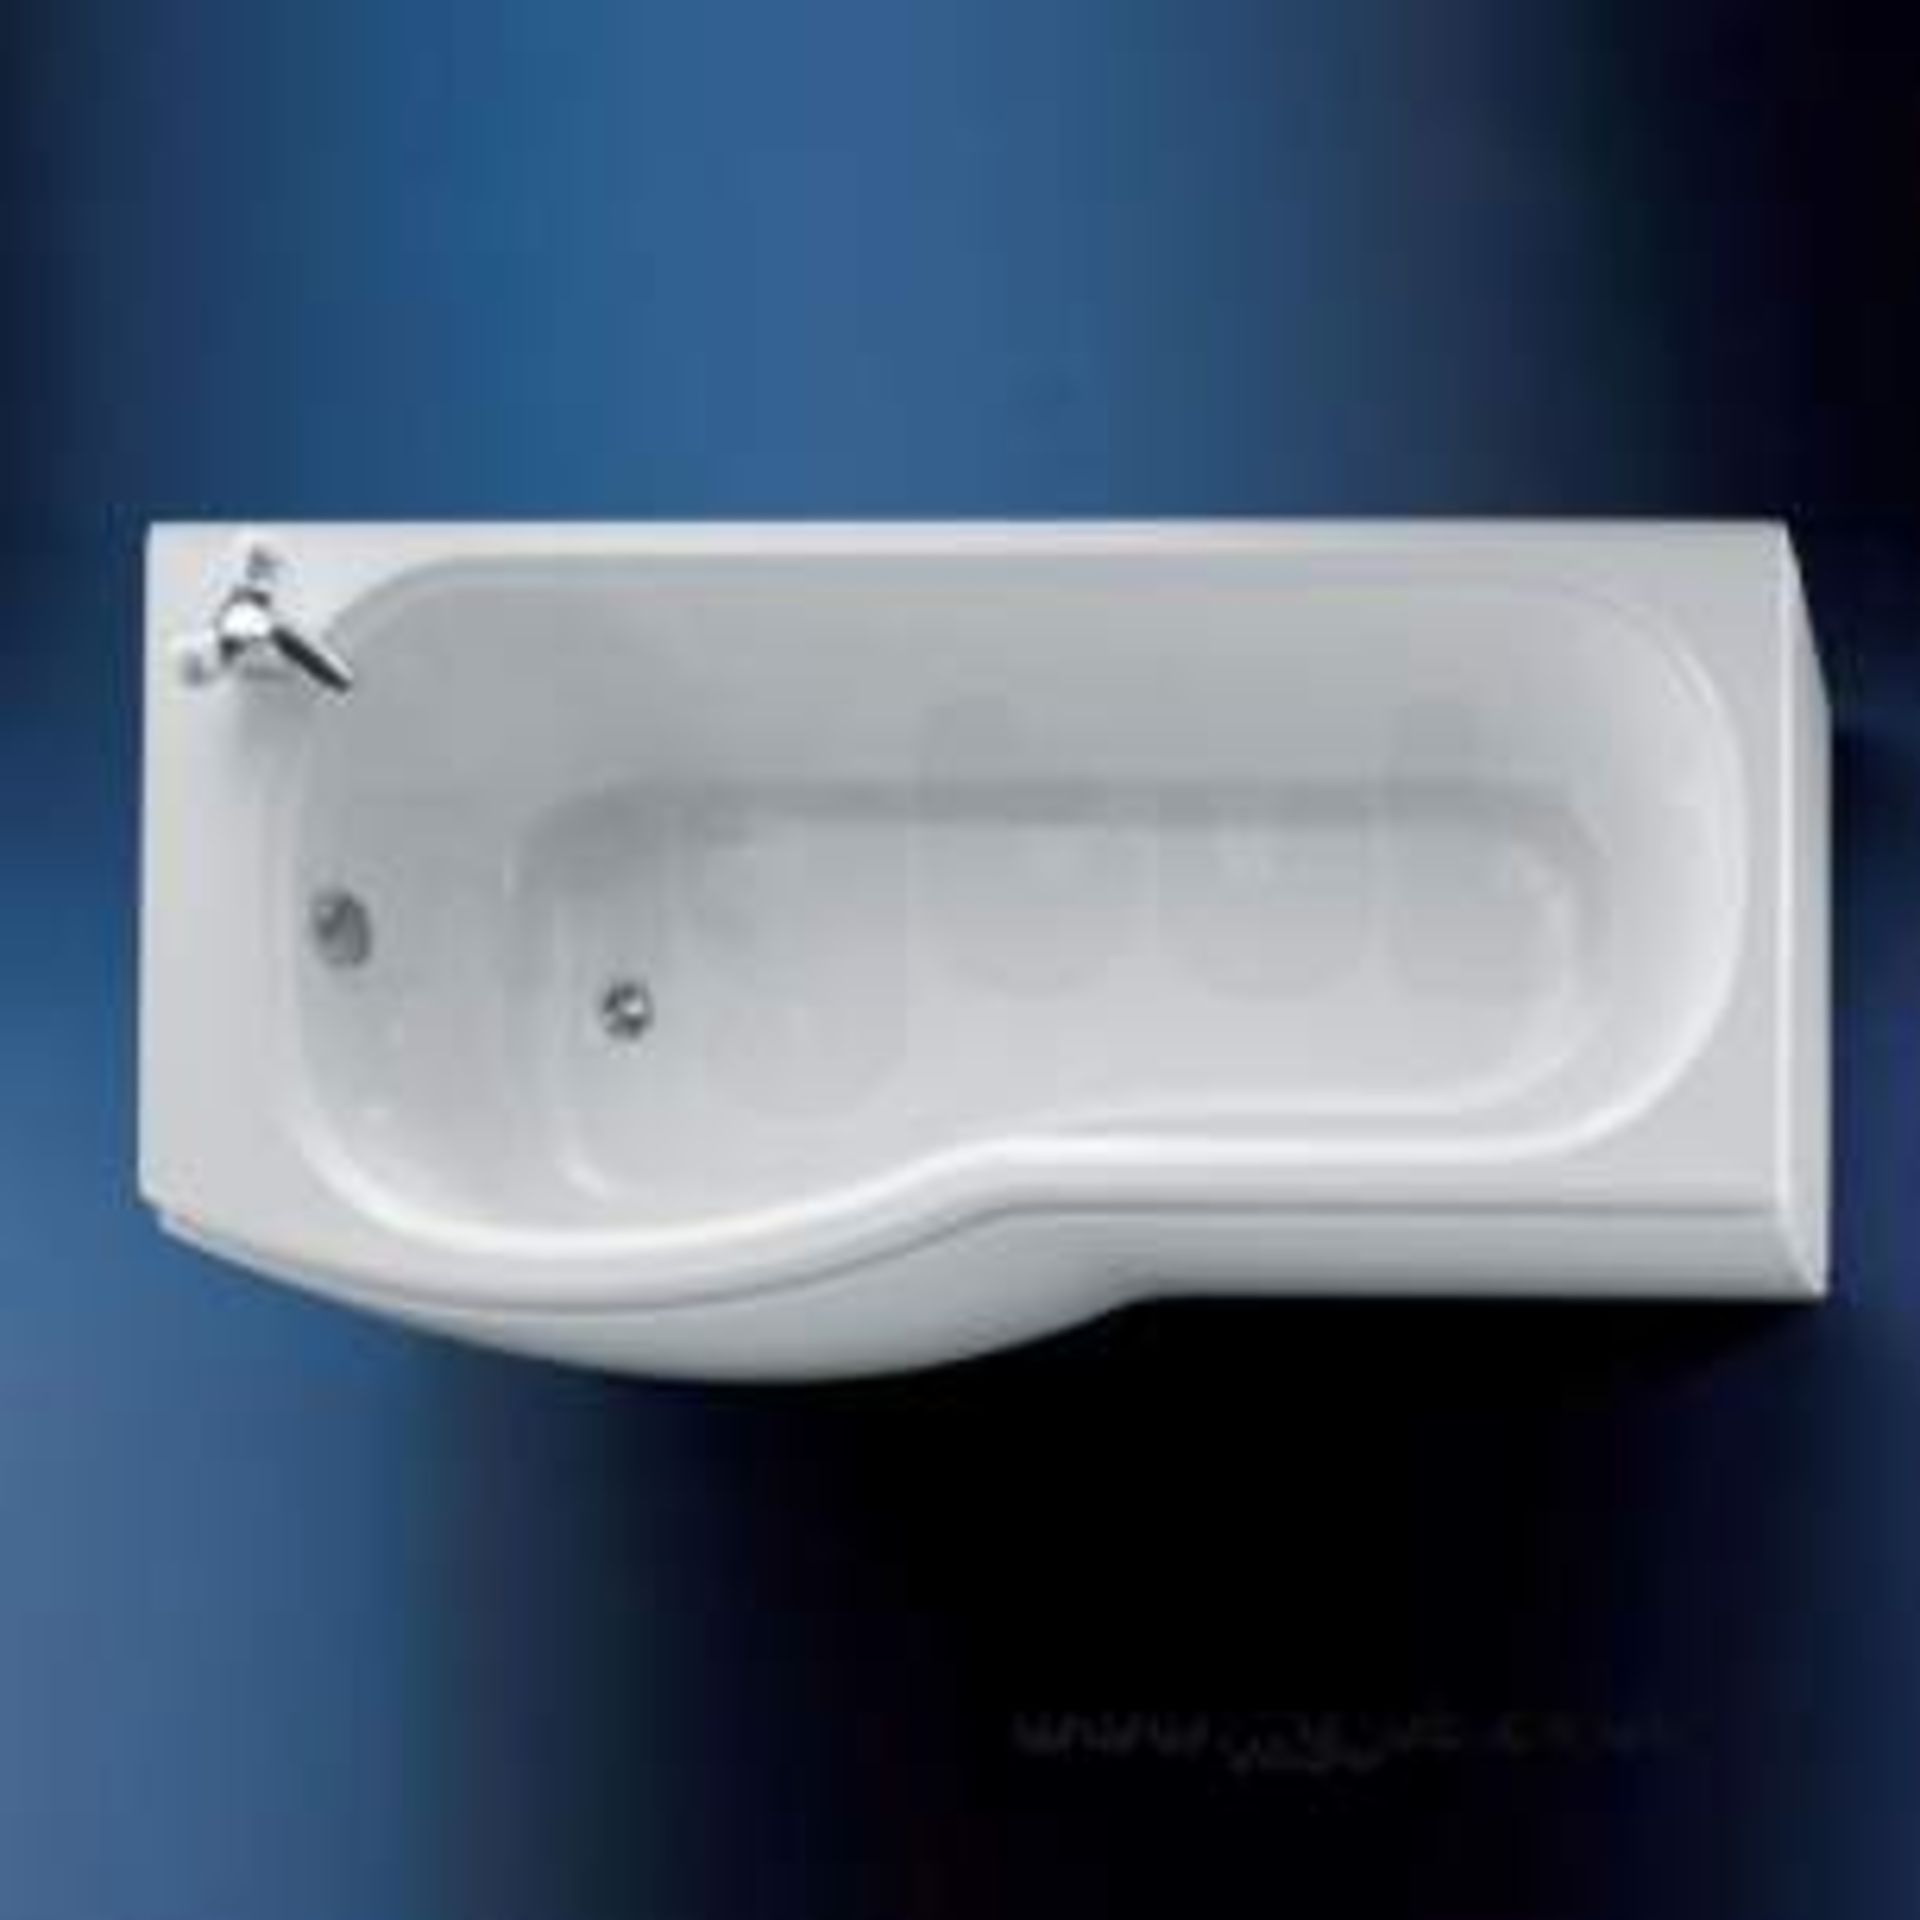 New Alto E7602 1700 X 800 Left Hand No Tap Holes Shower/Bath White. Rrp £247.99. 170 X 80 Idea...